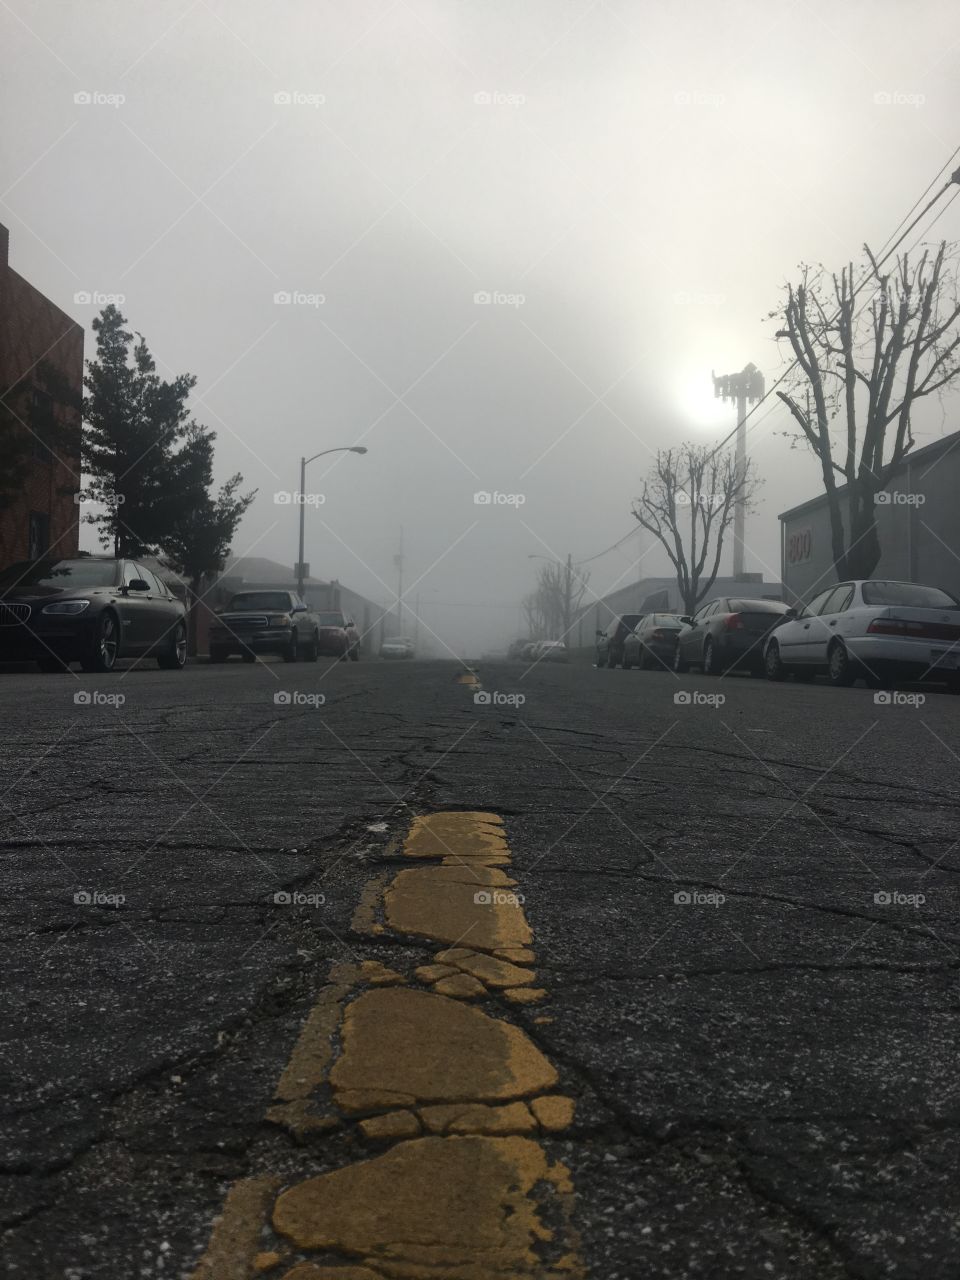 Fog of the world